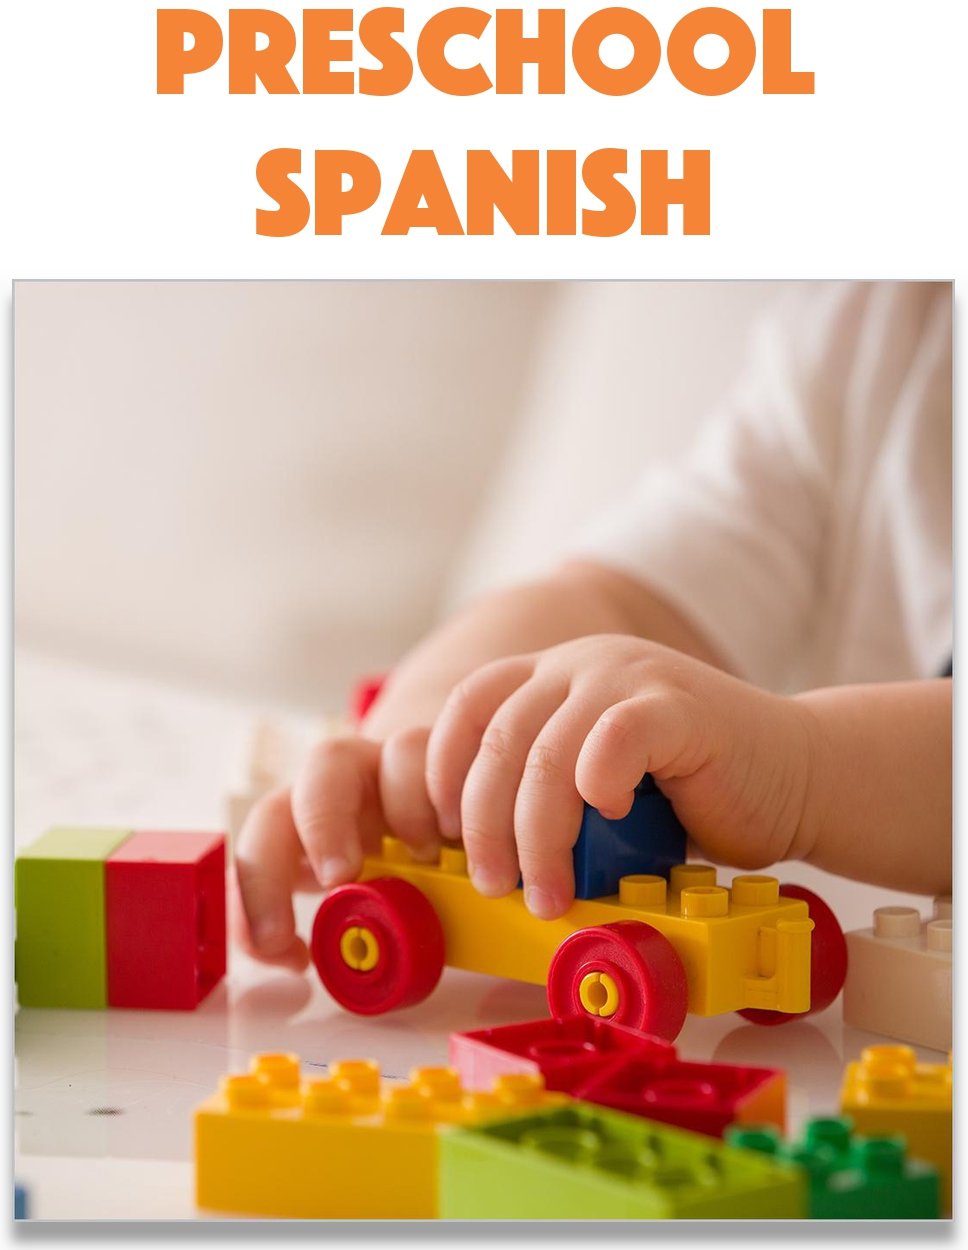 Preschool Spanish Books